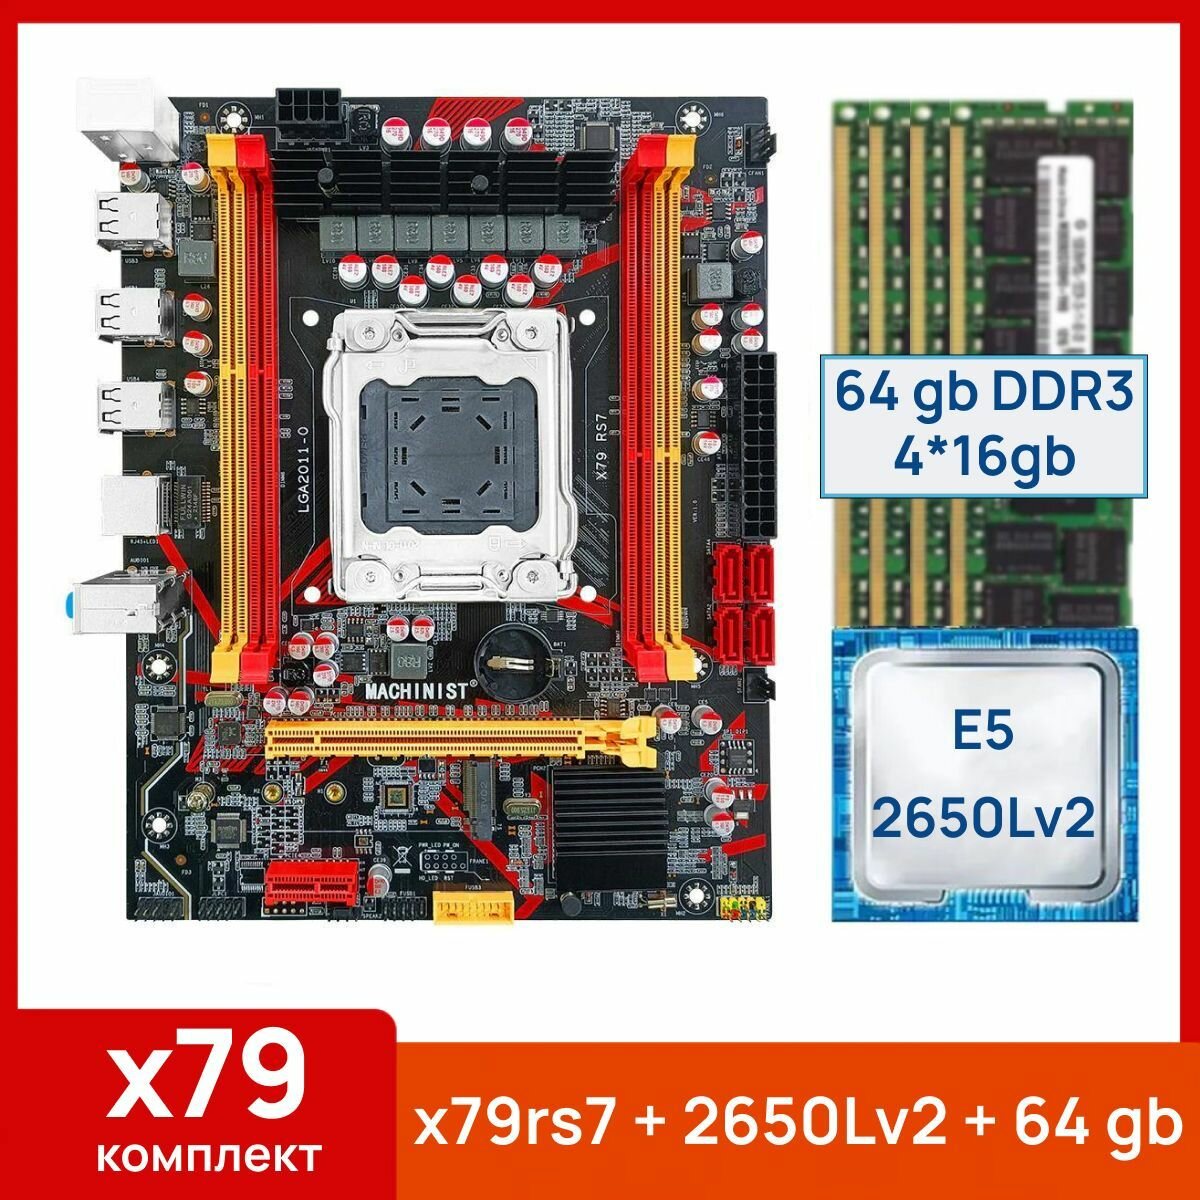 Комплект: Материнская плата Machinist RS-7 + Процессор Xeon E5 2650Lv2 + 64 gb(4x16gb) DDR3 серверная